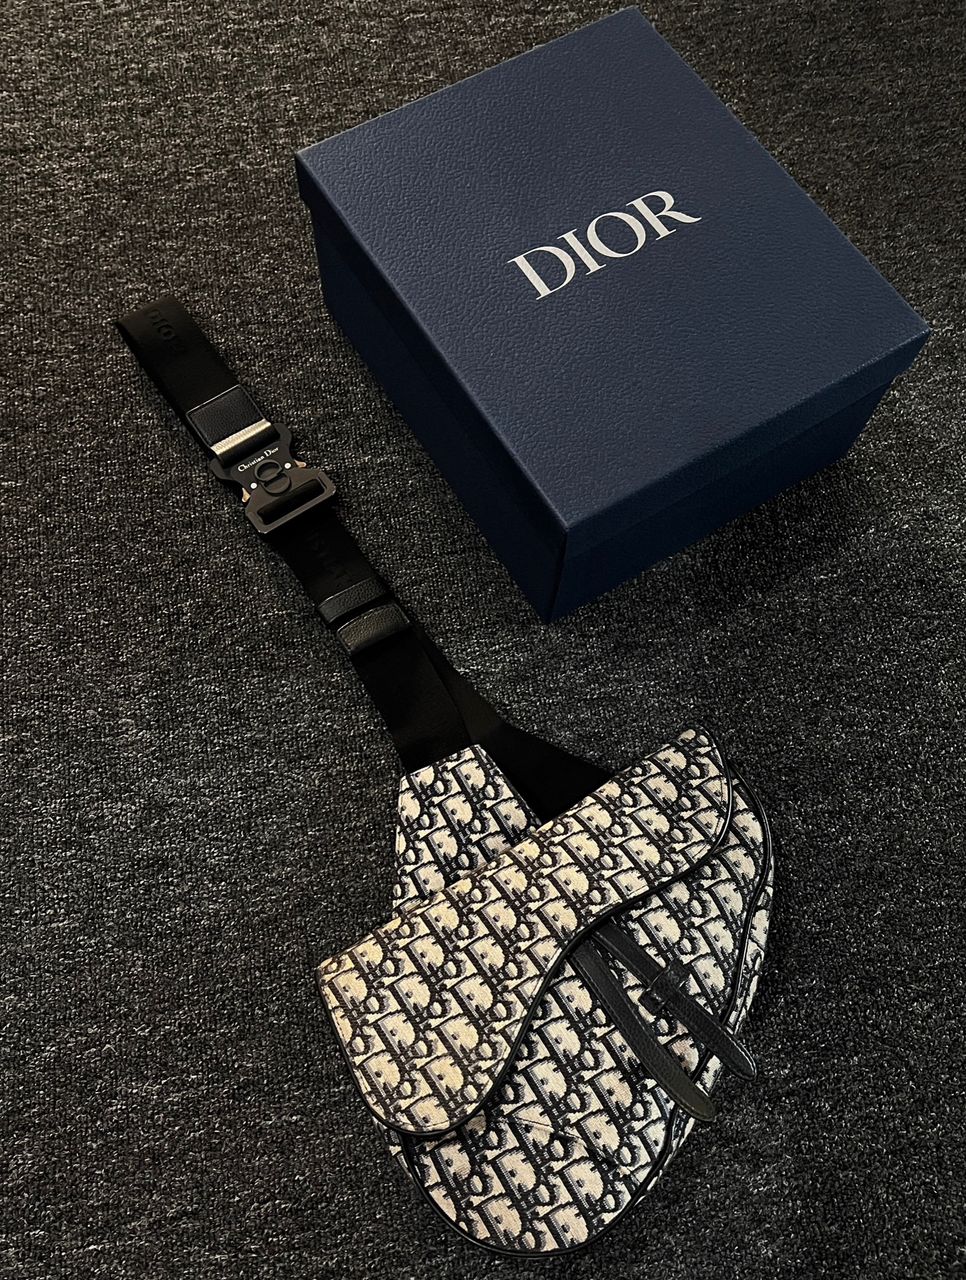 Dior Saddle Bag Balance